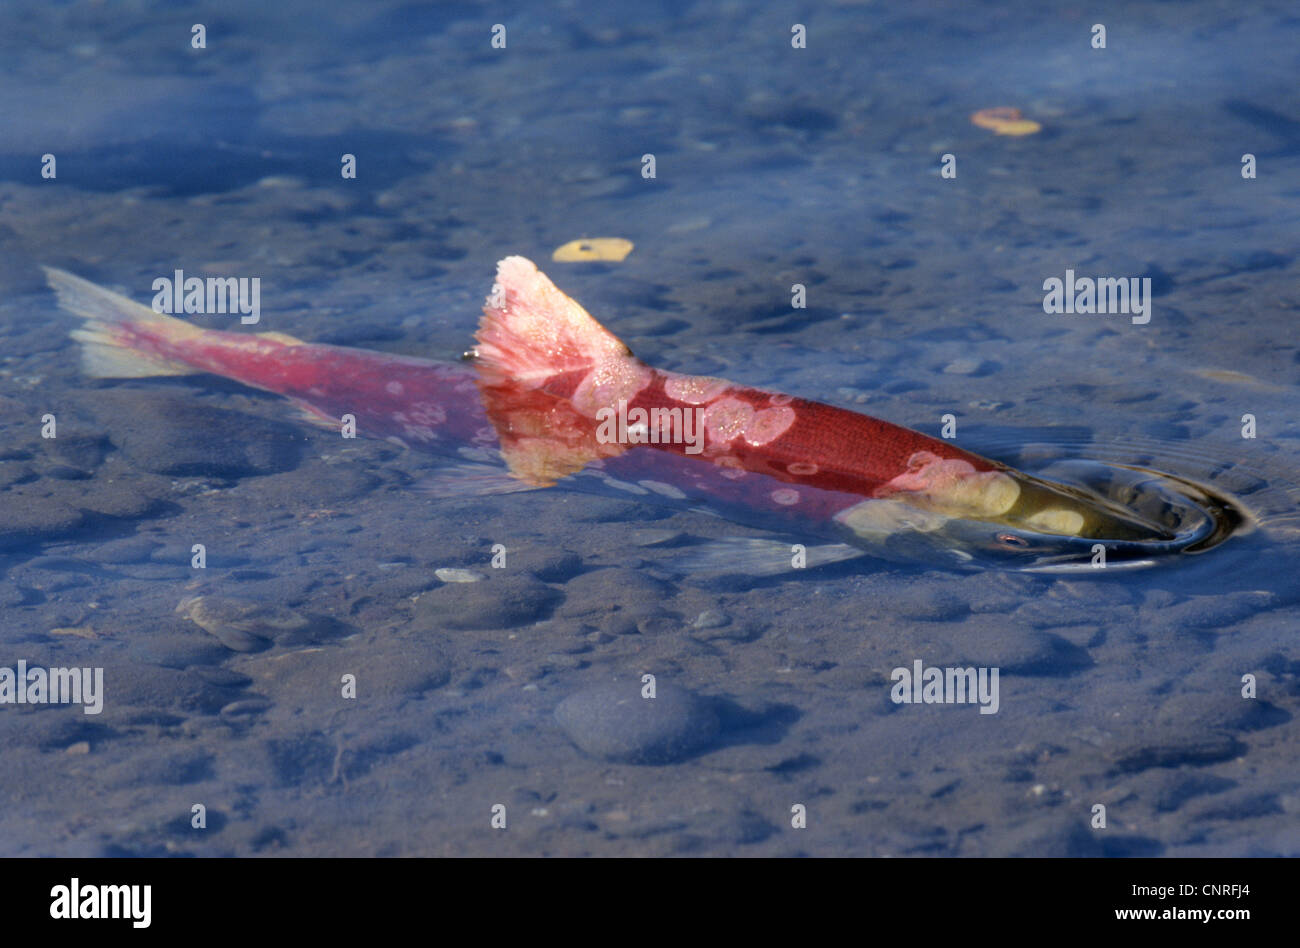 Le saumon rouge, le saumon rouge, le saumon rouge, bleu (Oncorhynchus nerka), seule personne dans l'eau peu profonde, USA, Alaska, Kenai Banque D'Images